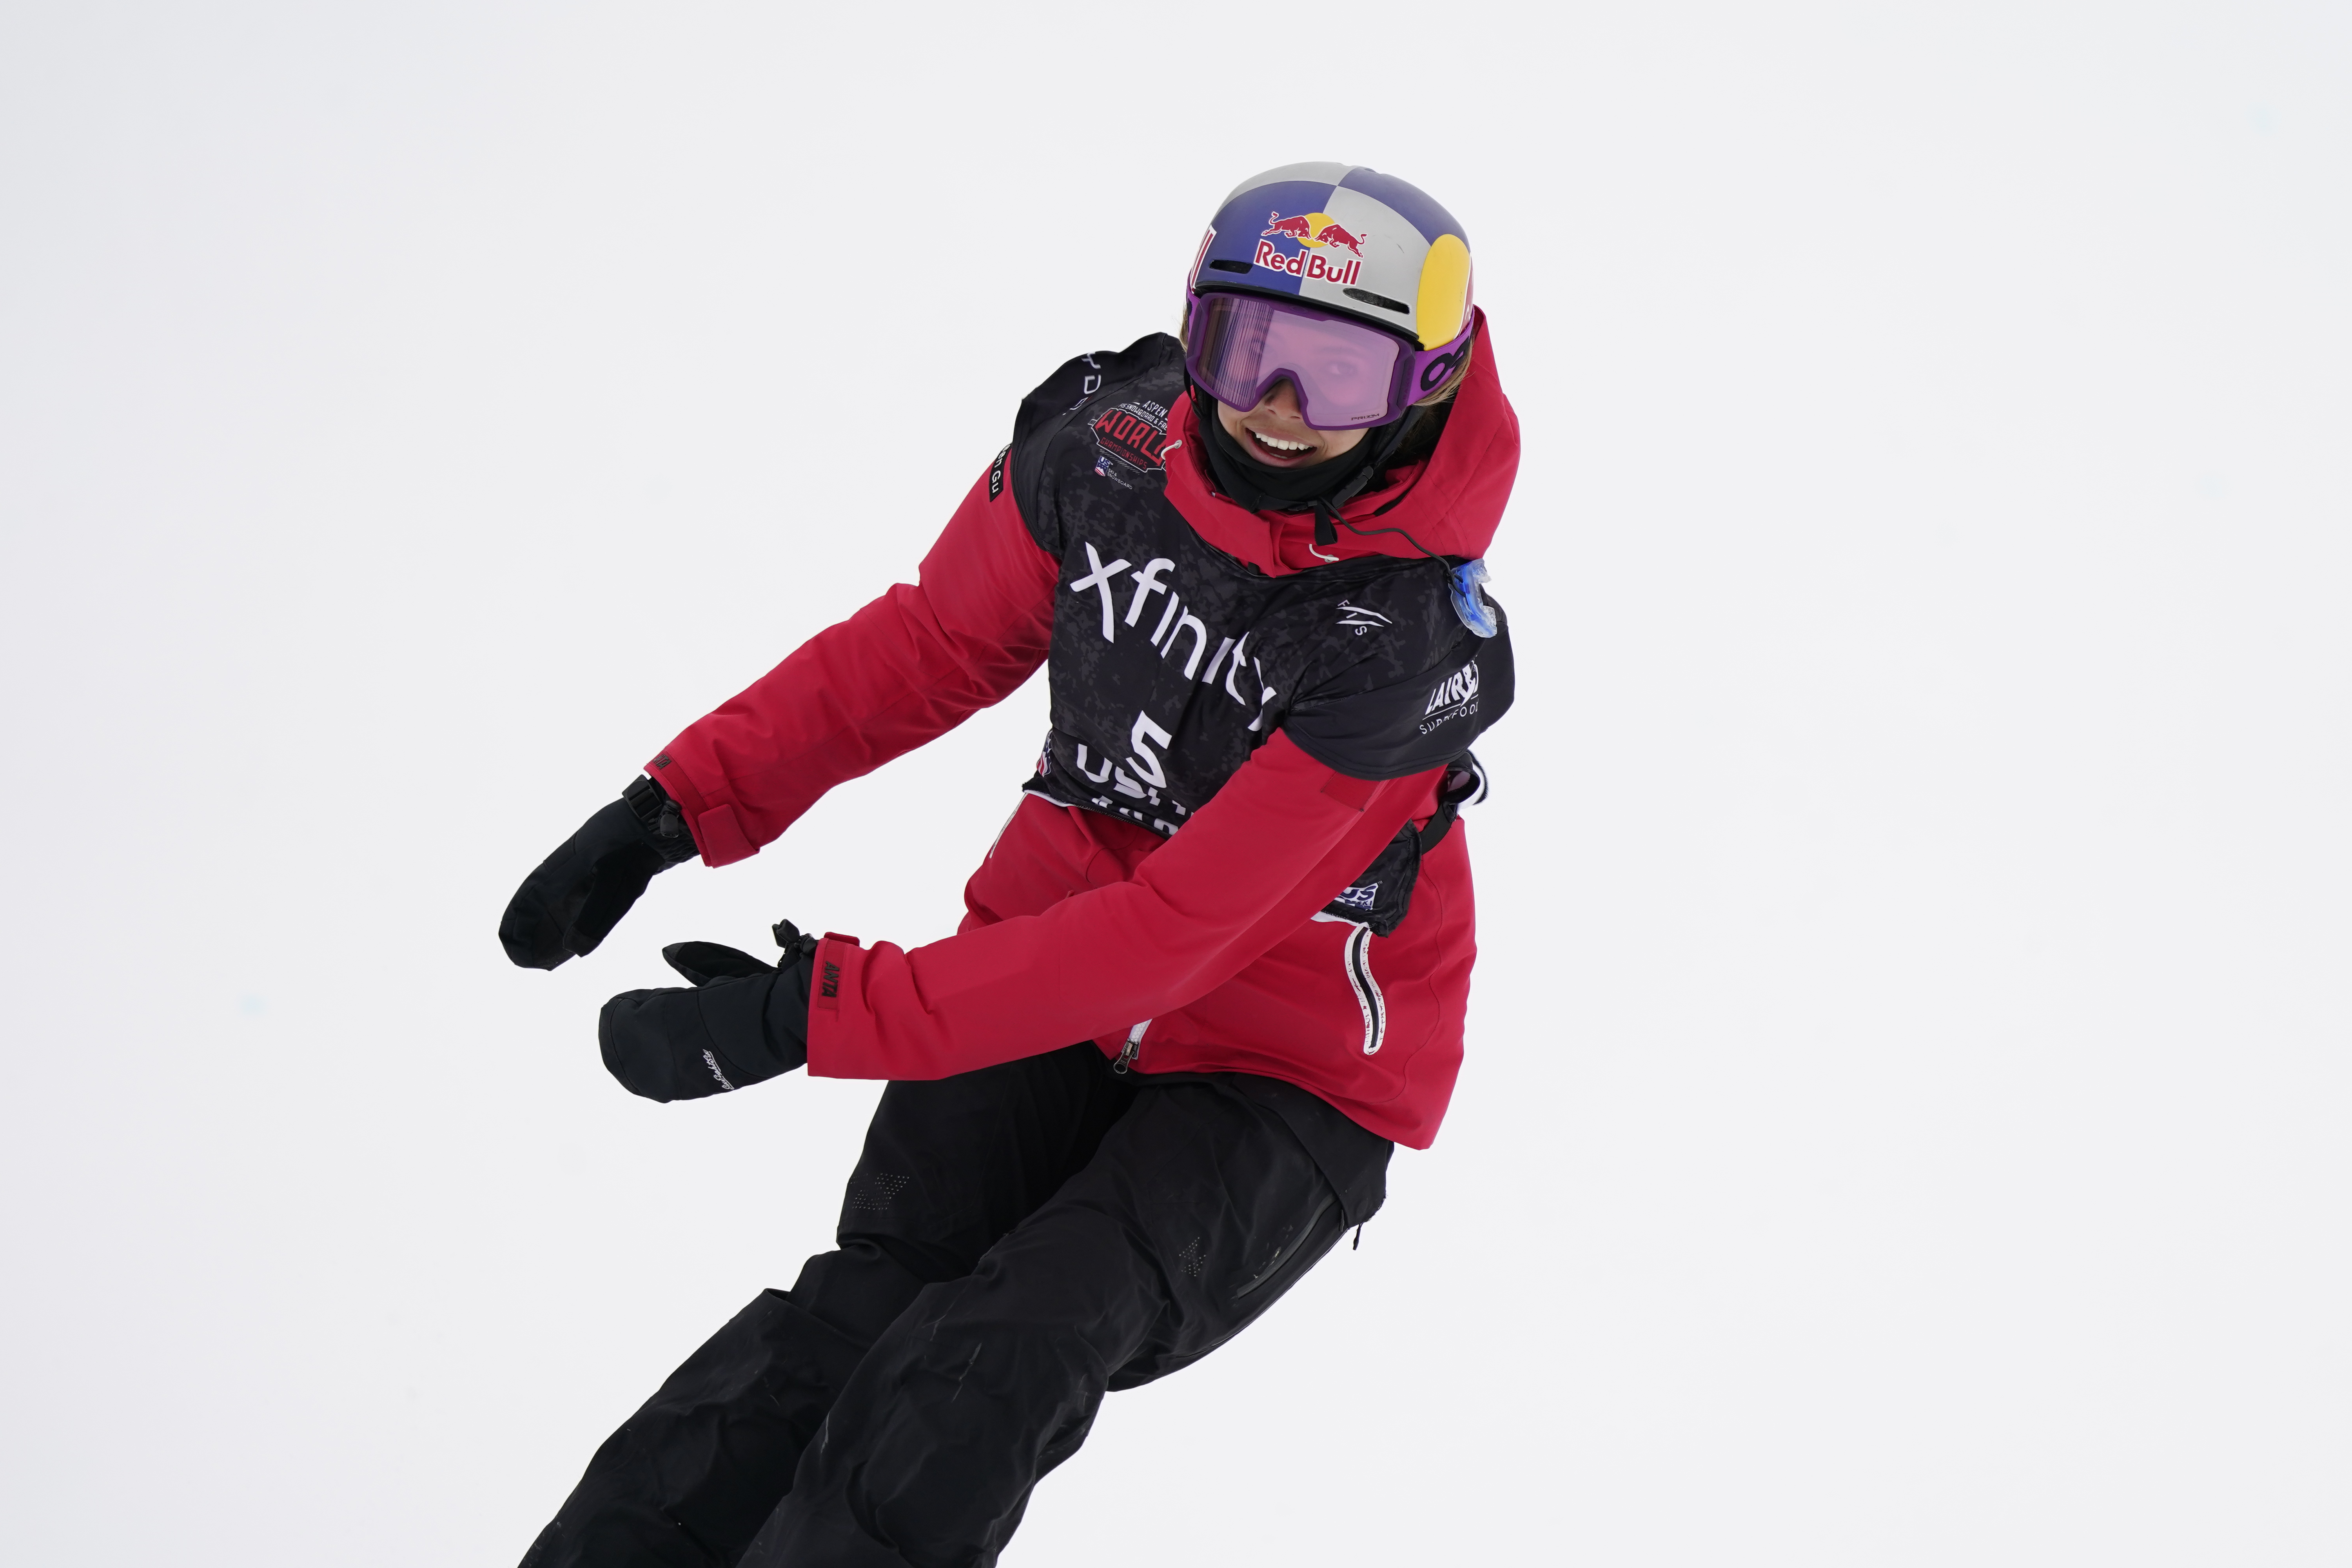 Snowboard: Aspen 2021 FIS Snowboard and Freeski World Championships